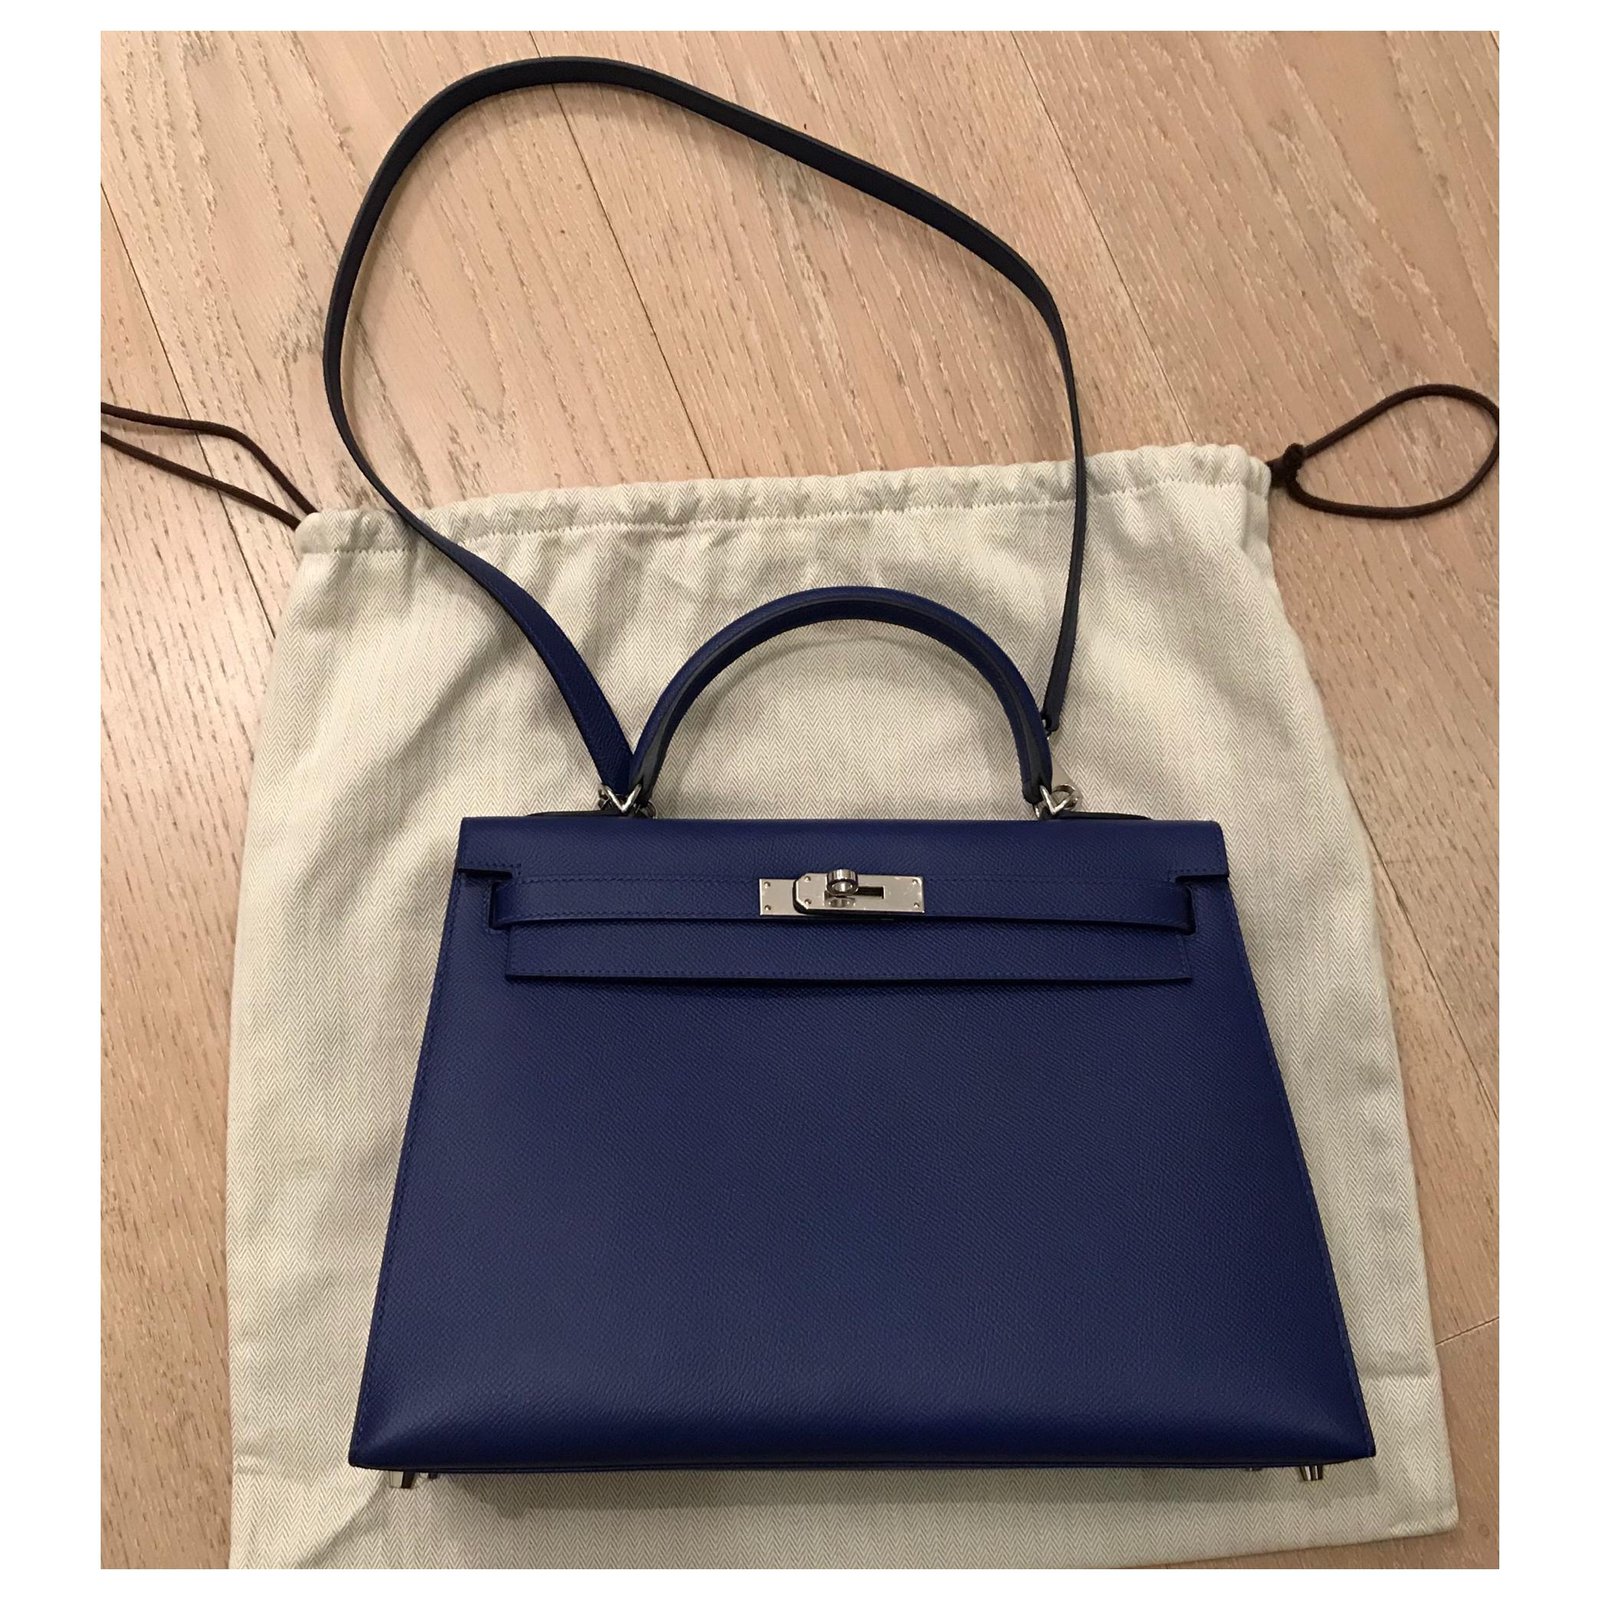 hermes kelly 32 cm handbag in navy blue courchevel leather